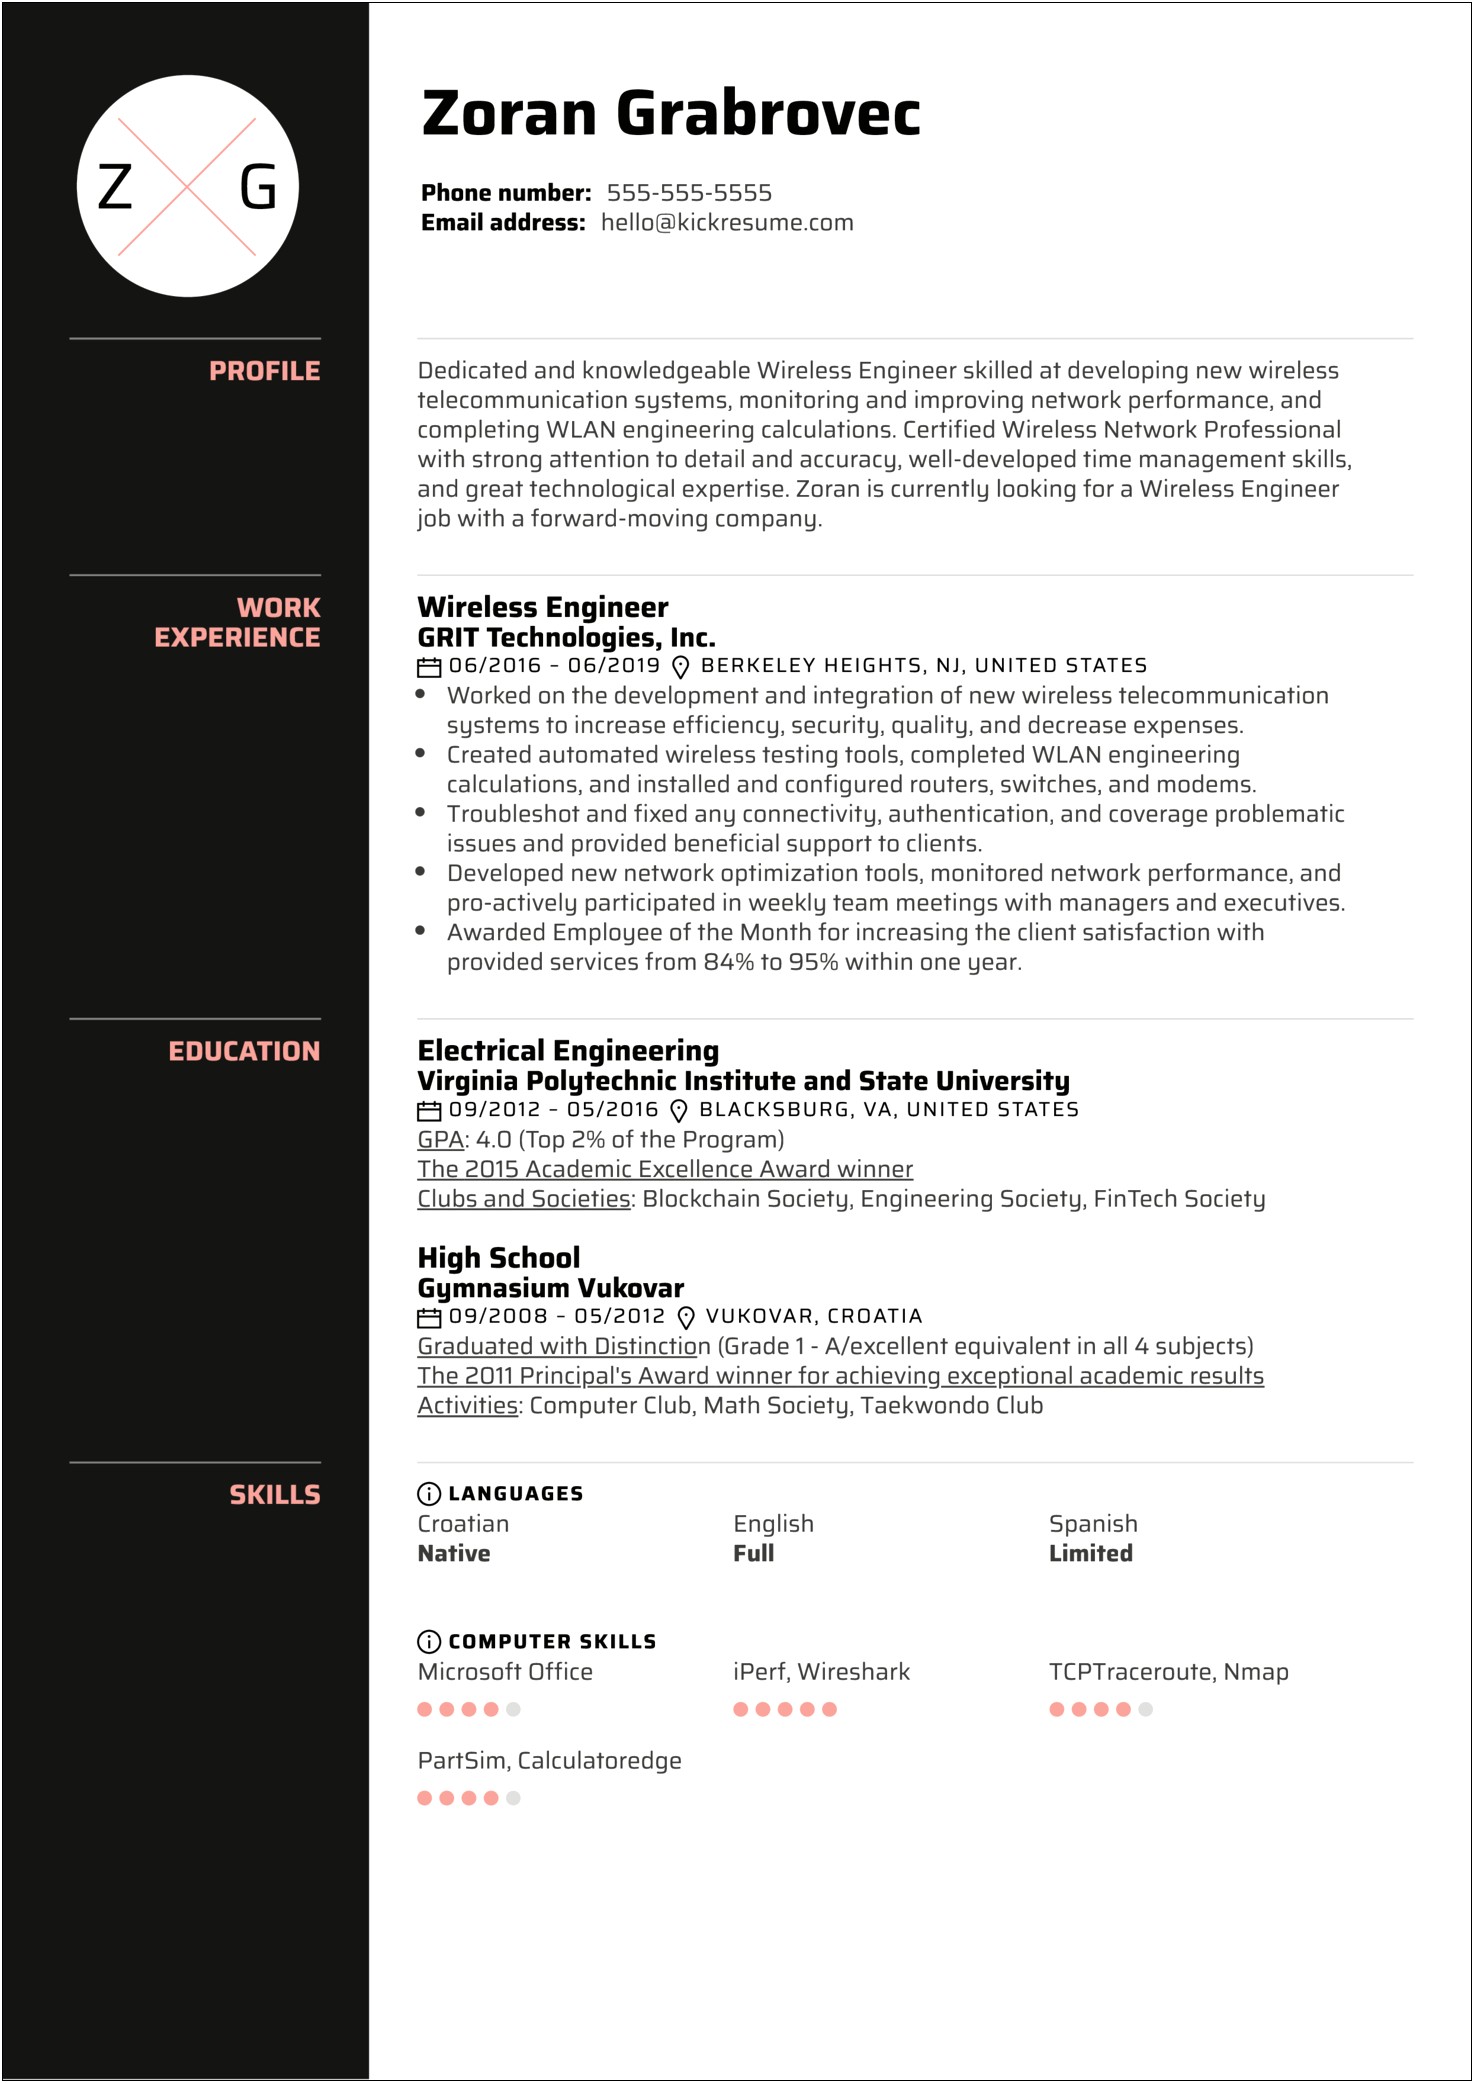 Telecommunications Specialist Job Description Resume